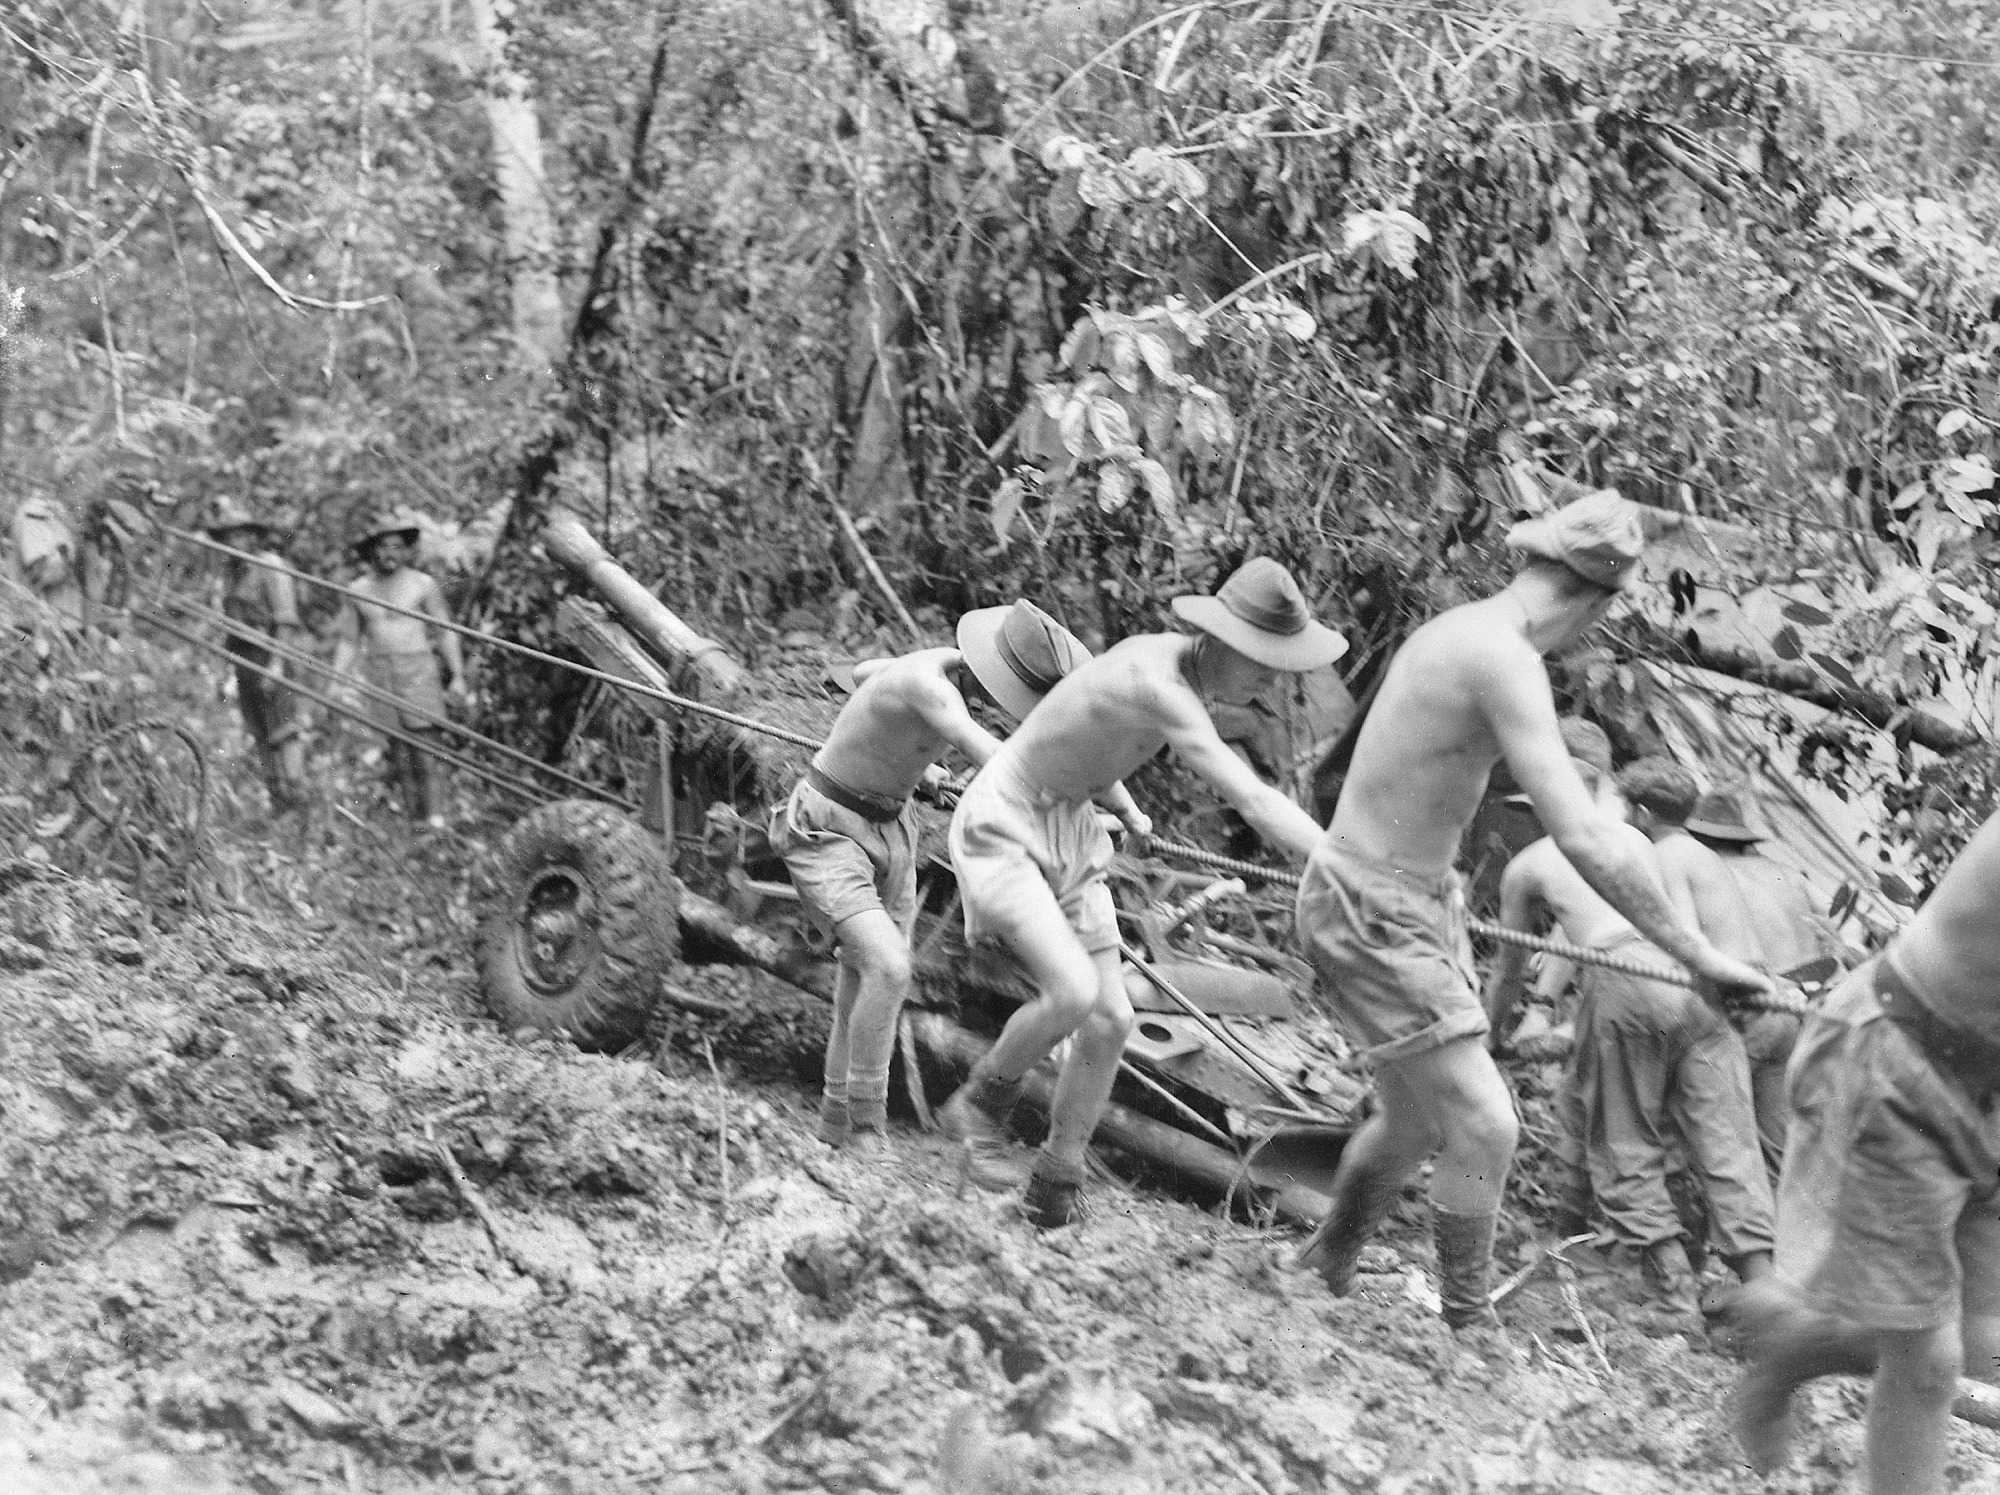 Guns being pulled through dense jungle on the Kokoda Trail, 1942